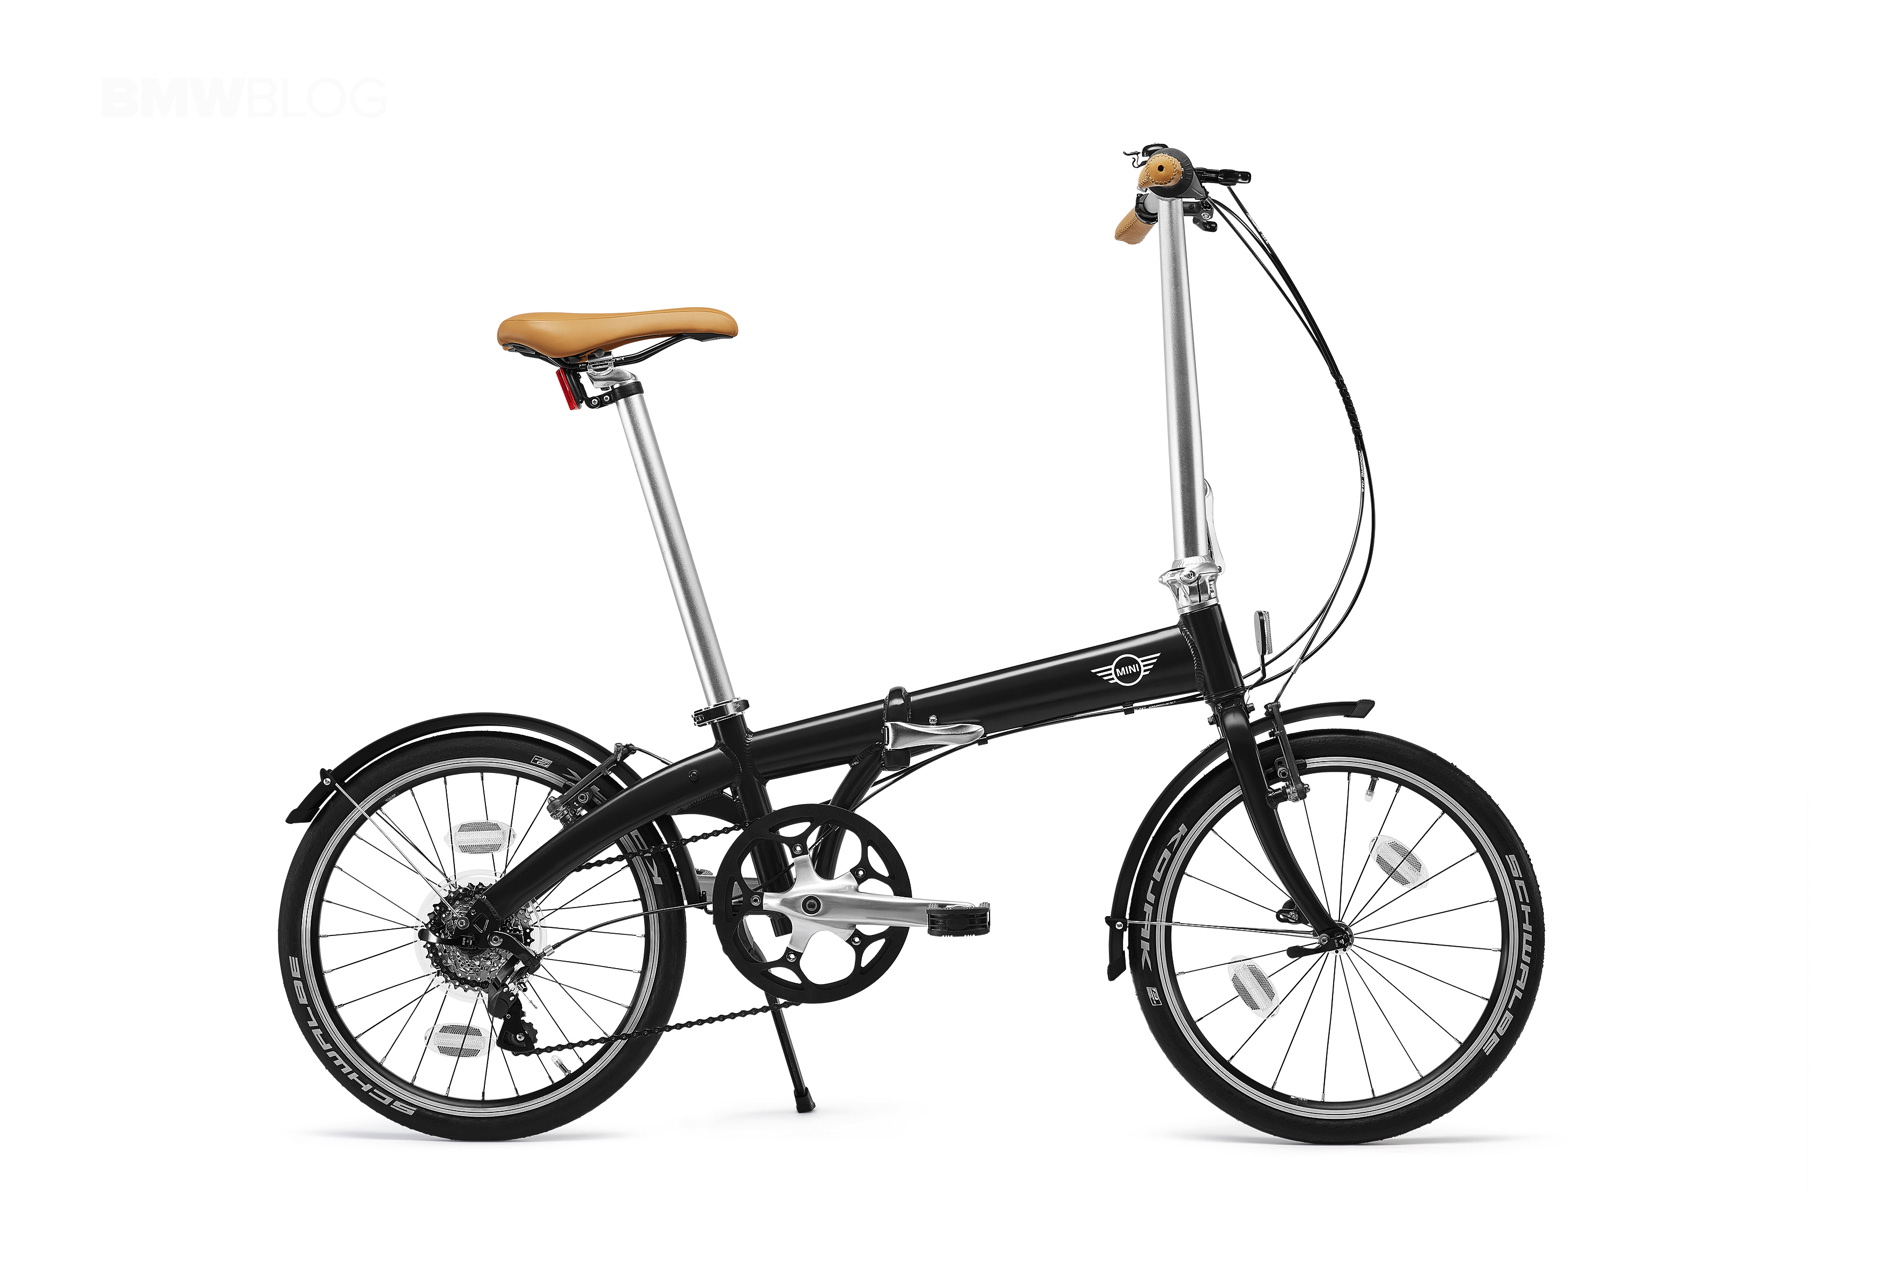 The new MINI Folding Bike